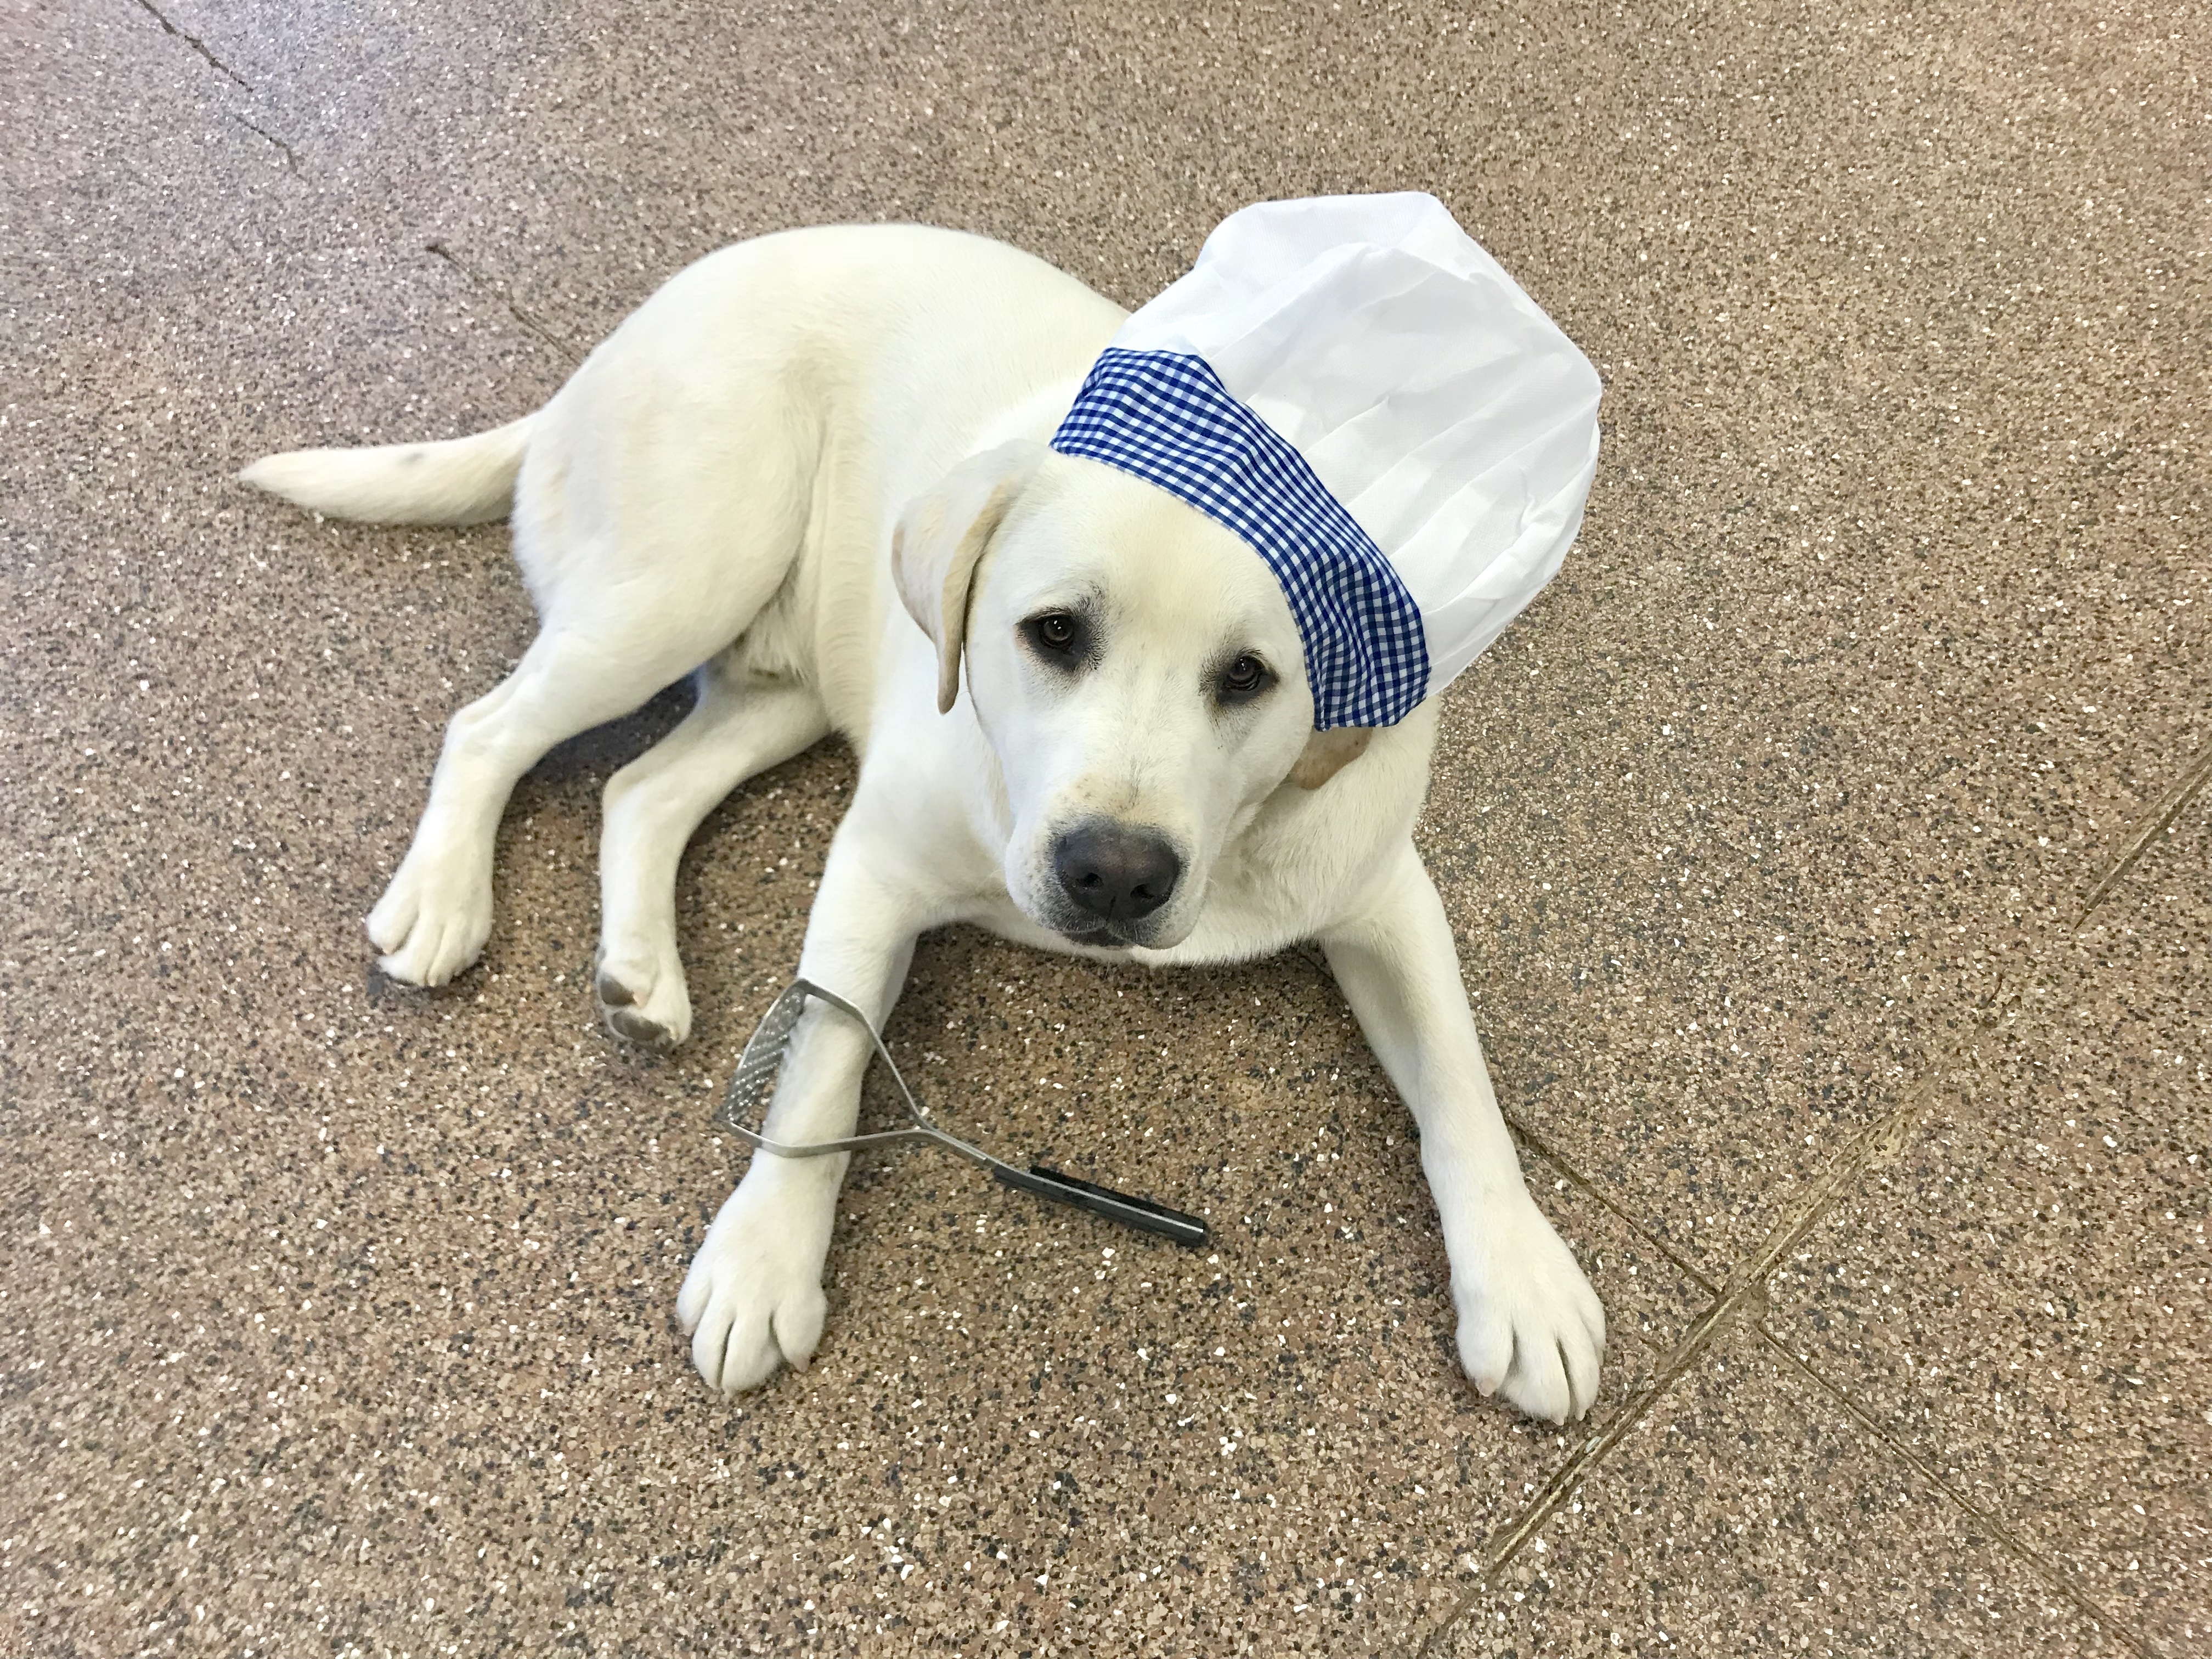 White Labrador retriever with a chef's hat and potato masher